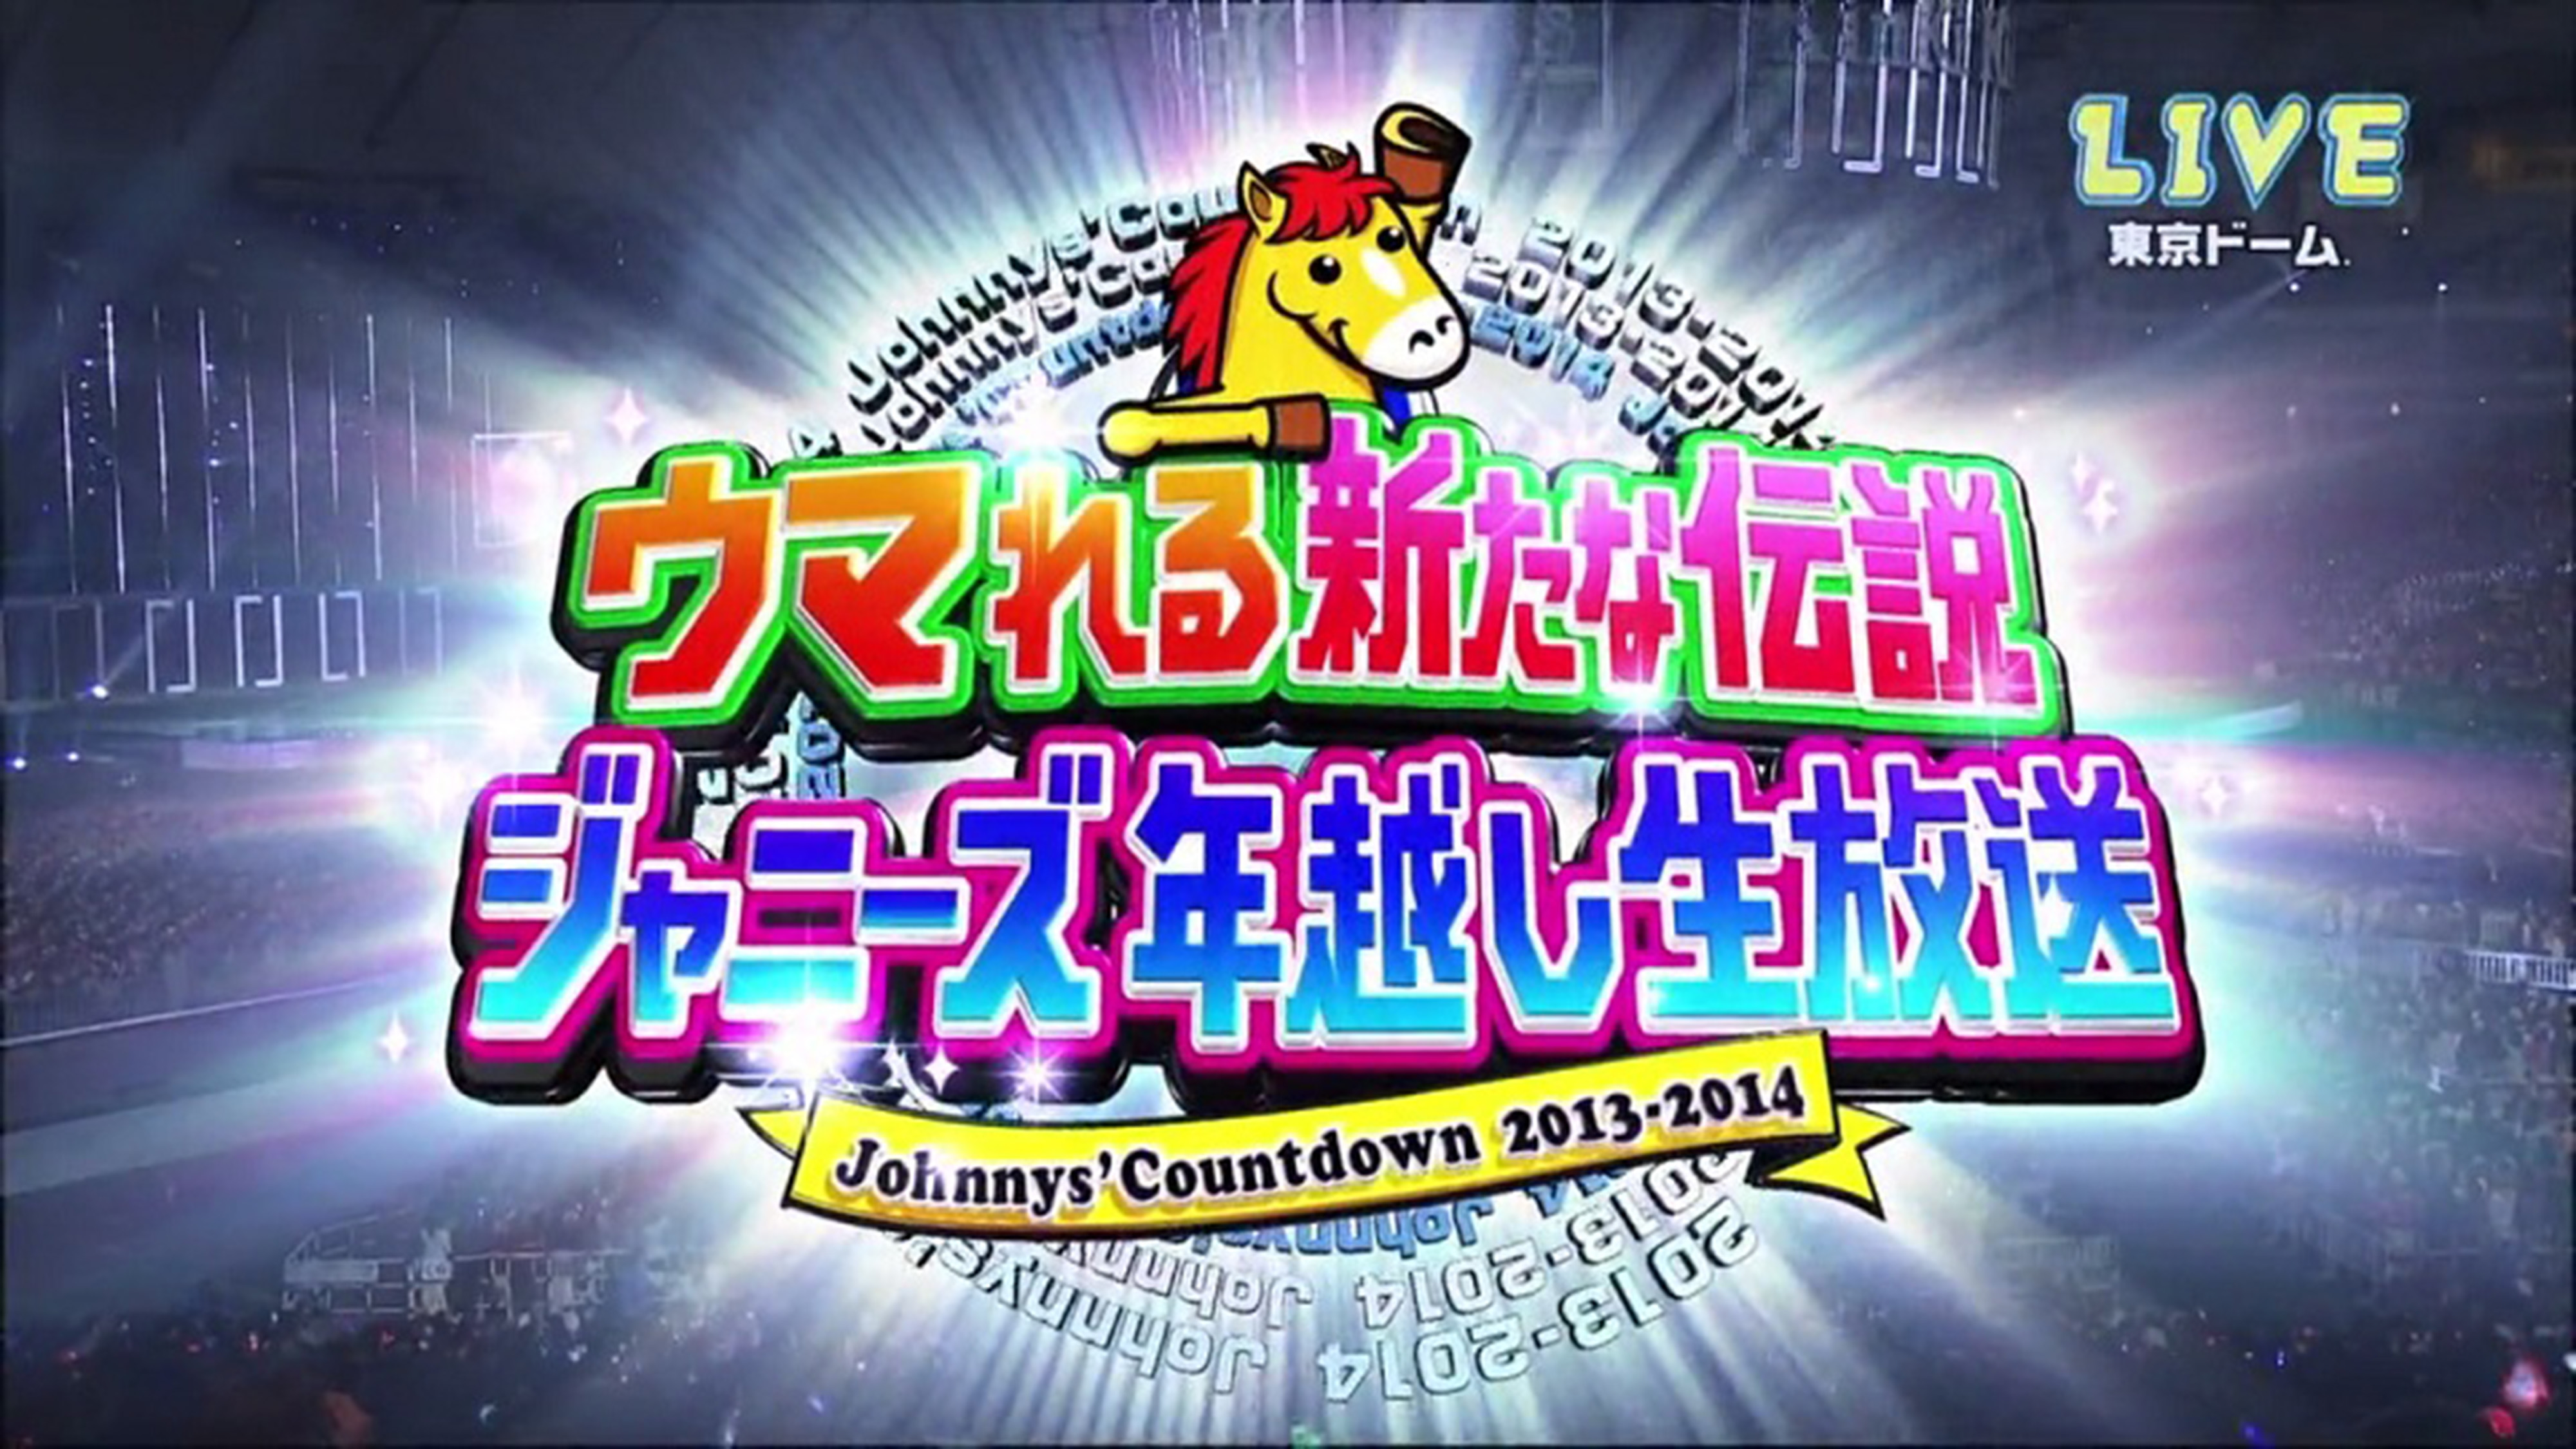 Johnny\x27s Countdown(2010-2011 Johnny countdown)